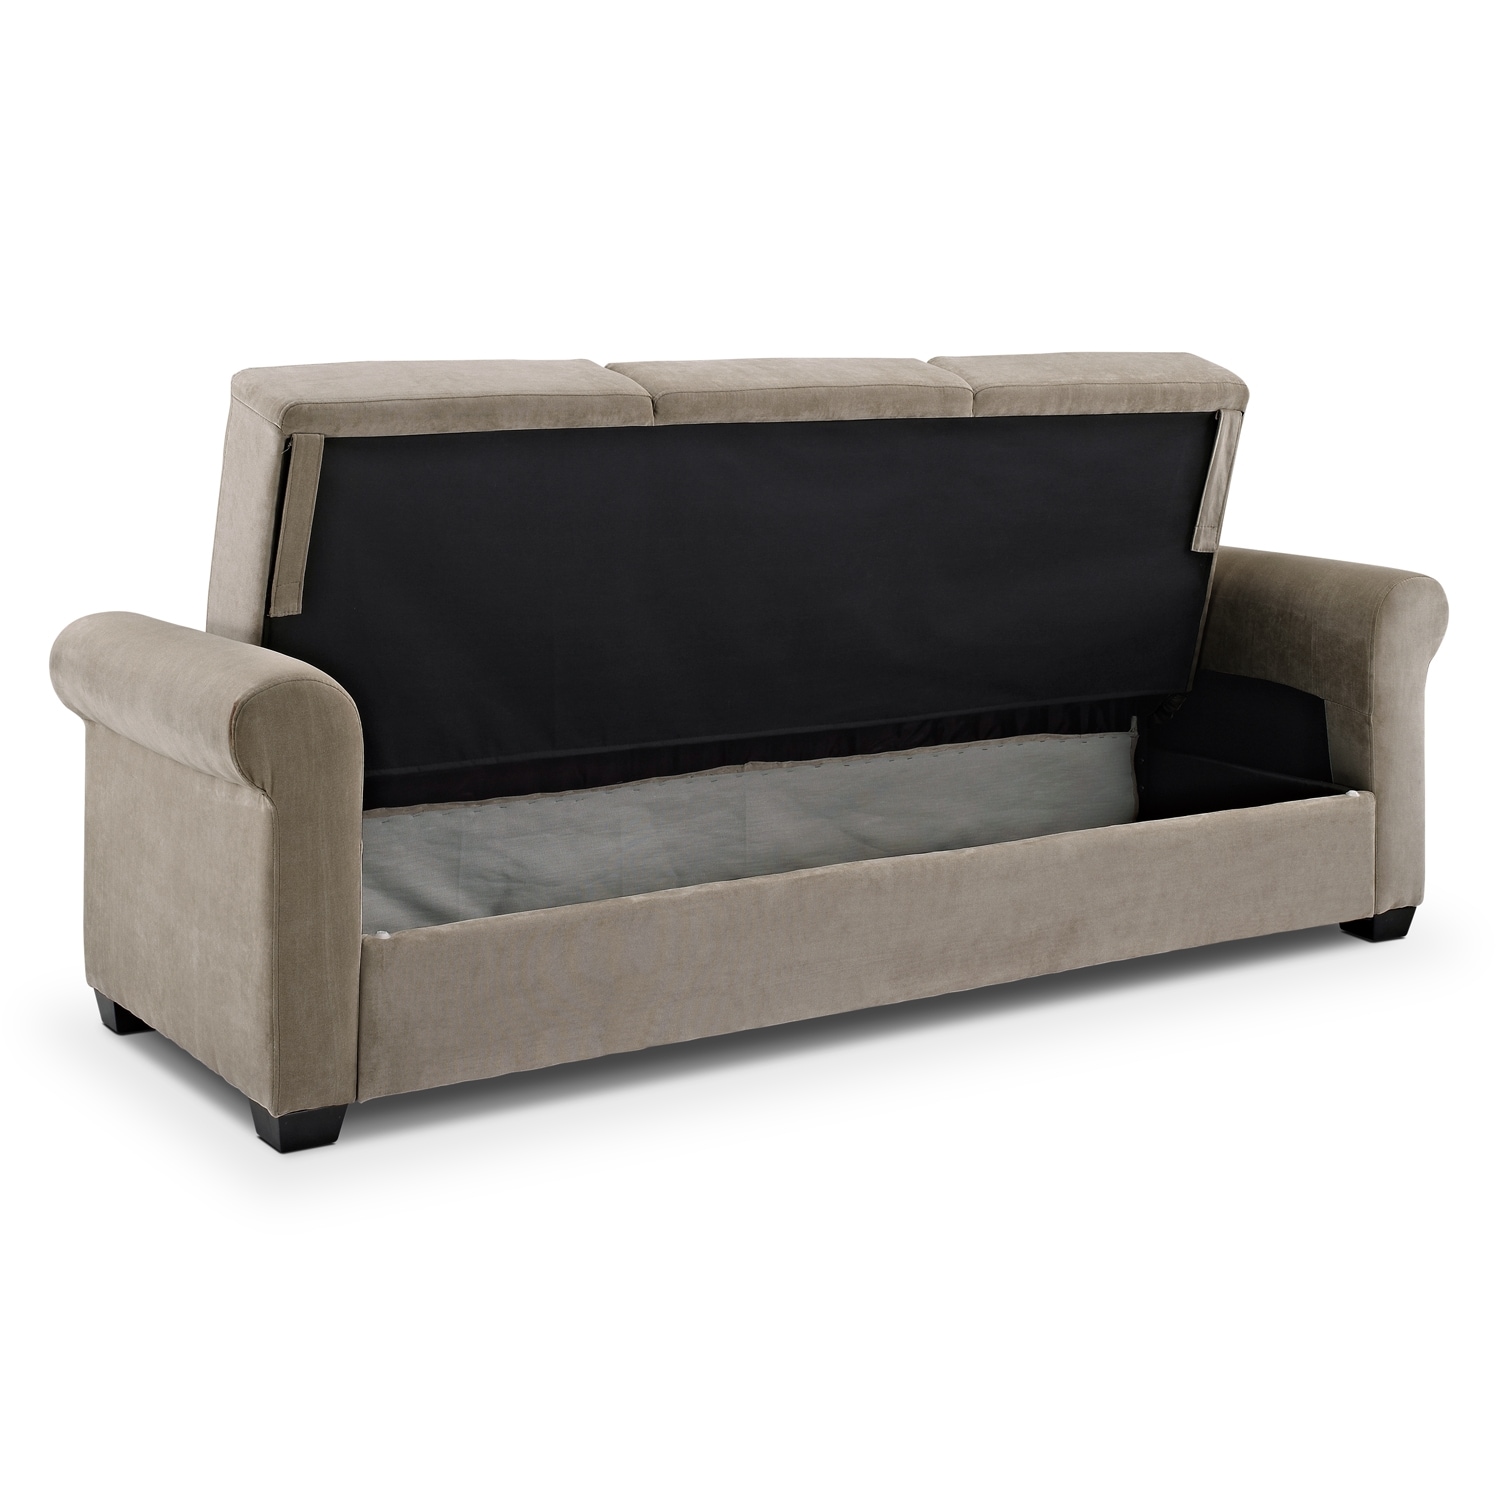 Thomas Futon Sofa Bed with Storage  Value City Furniture